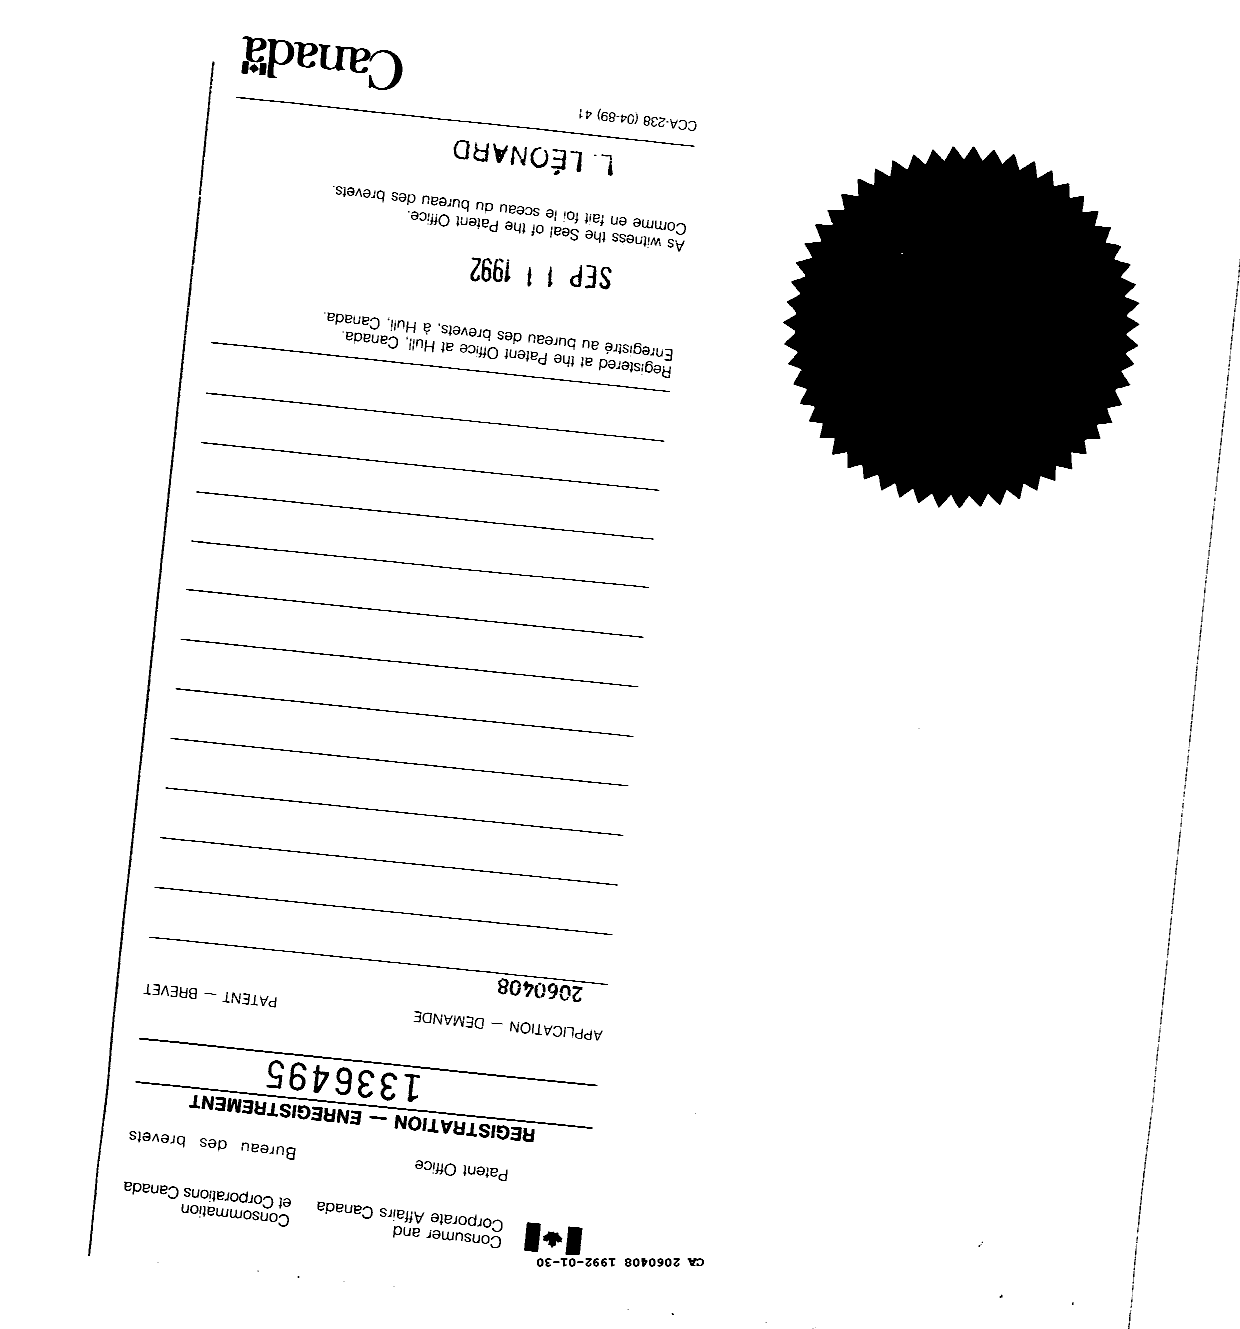 Canadian Patent Document 2060408. Prosecution Correspondence 19920130. Image 1 of 10